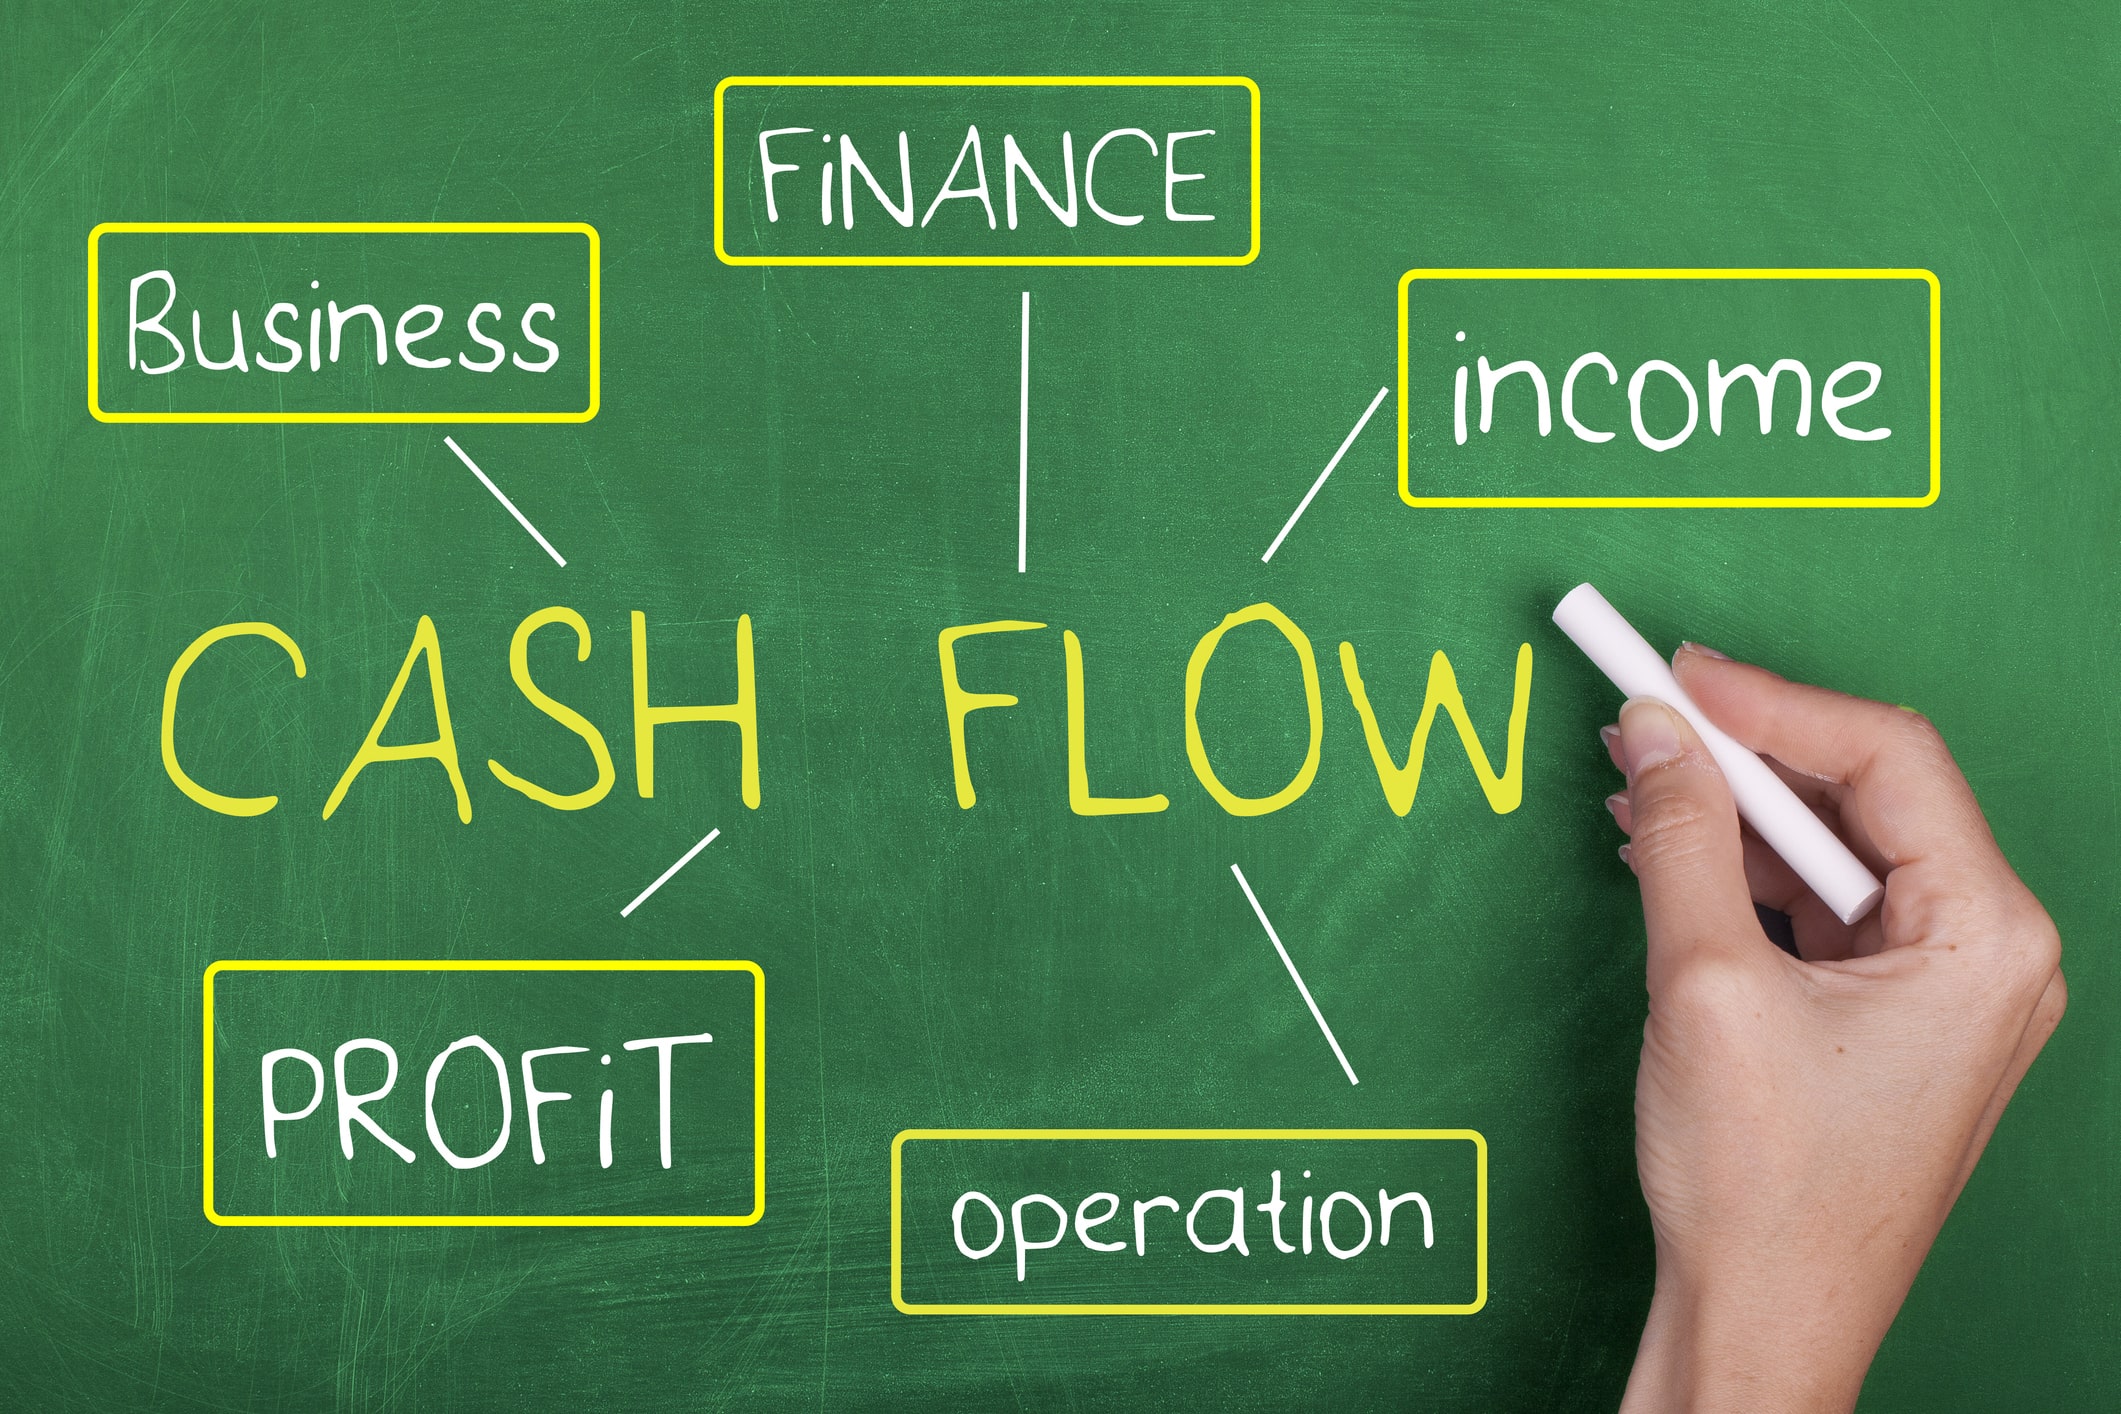 Monitor Cash Flow